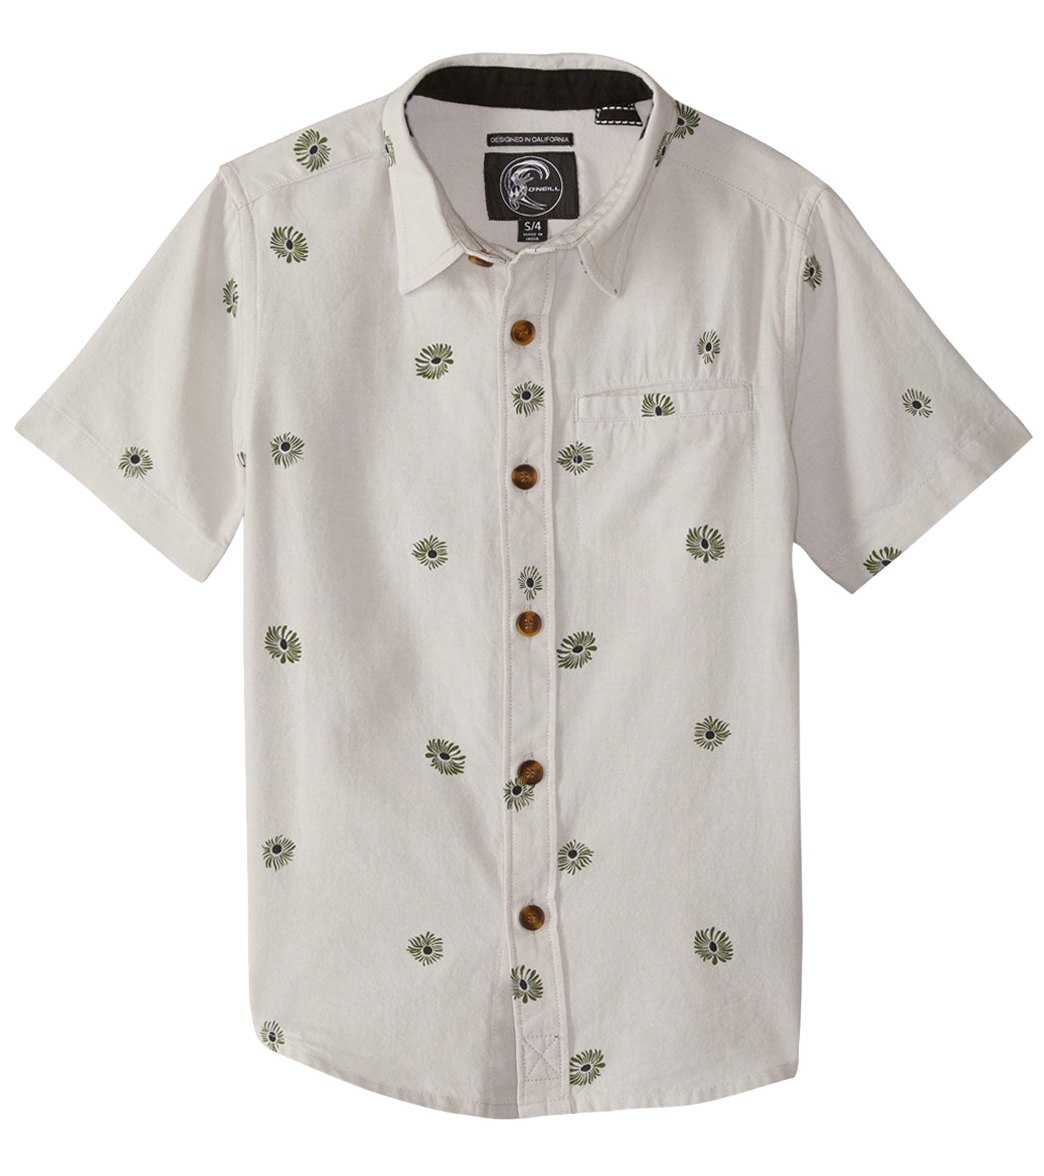 O'neill Boys' Brees Short Sleeve Tee Shirt 8-20 - Fog Large 14-16 Cotton - Swimoutlet.com